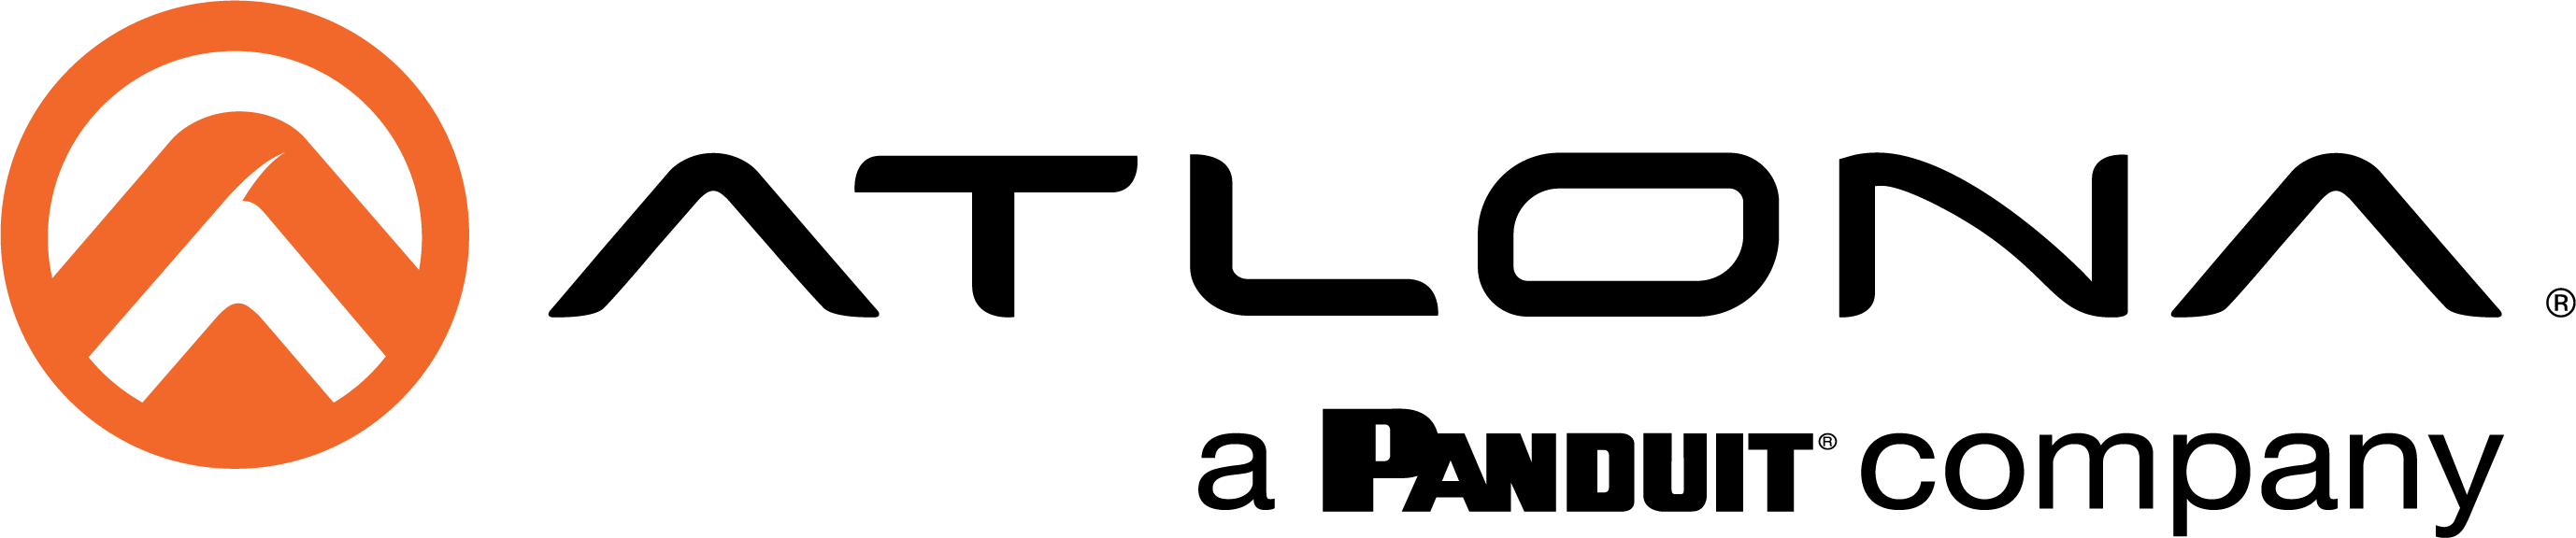 Atlona Logo - Branding Resources - Atlona Logos for Print and Web